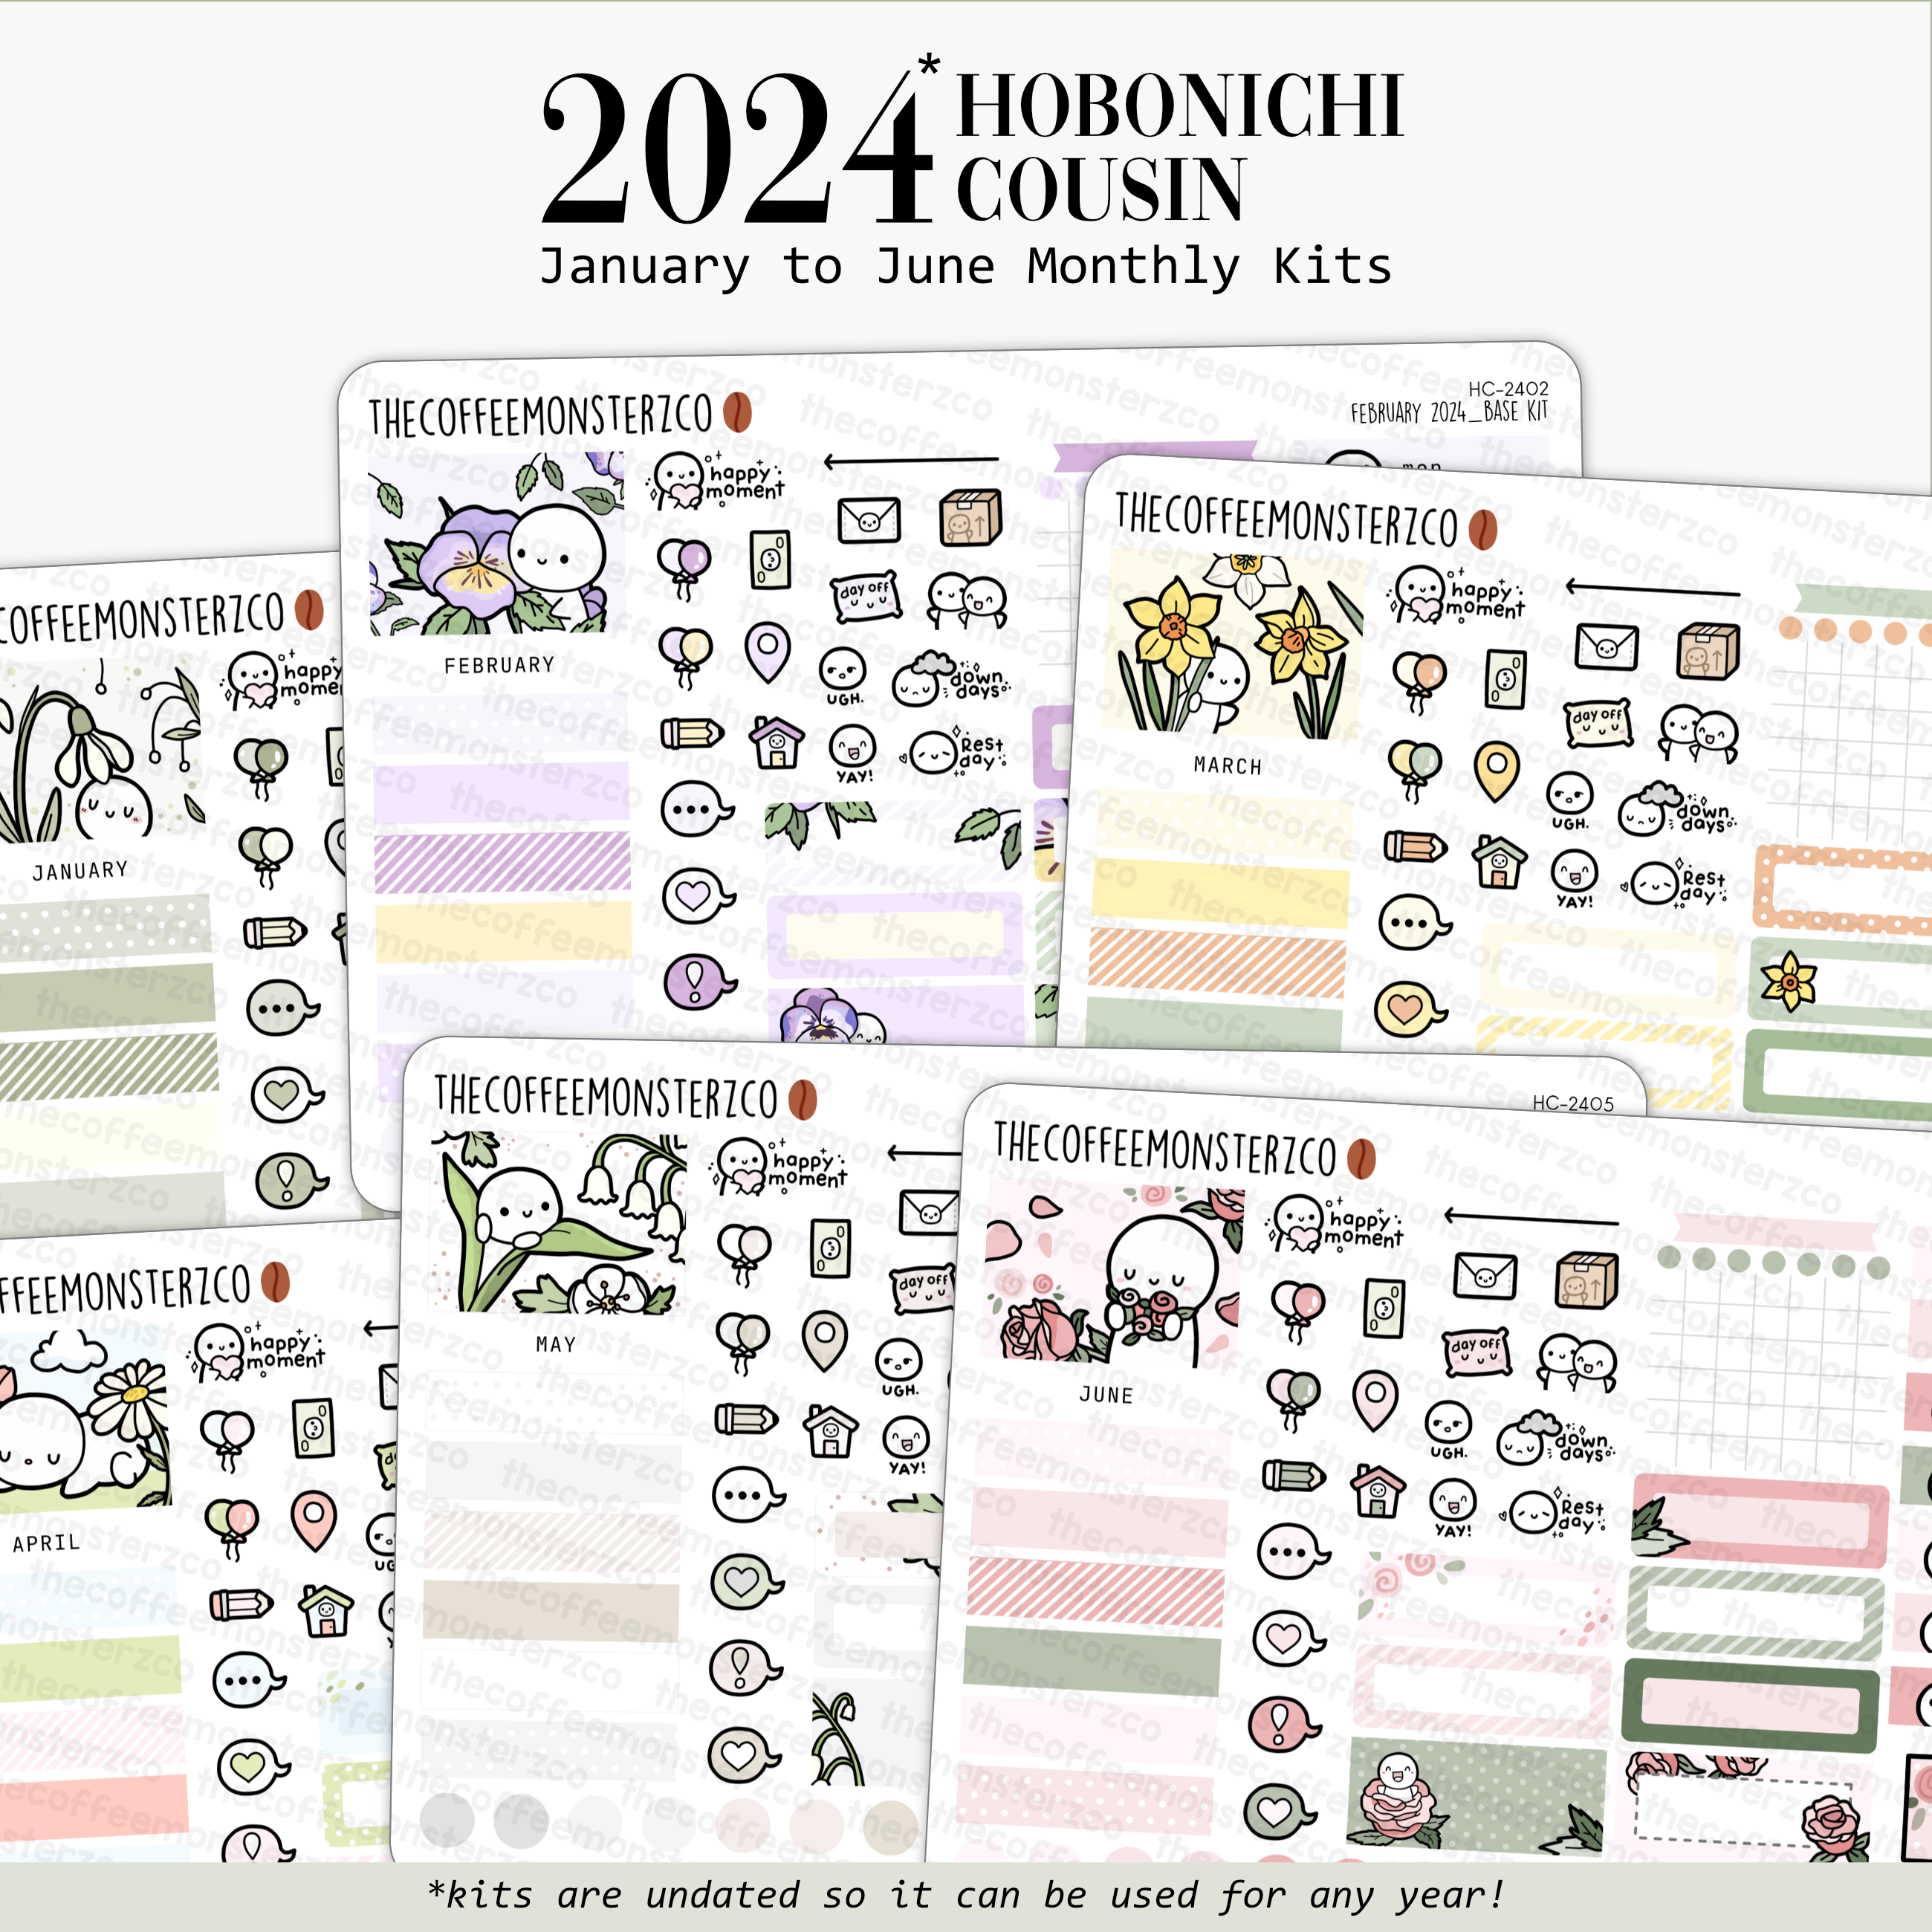 Academy  Hobonichi Cousin Weekly Sticker Kit